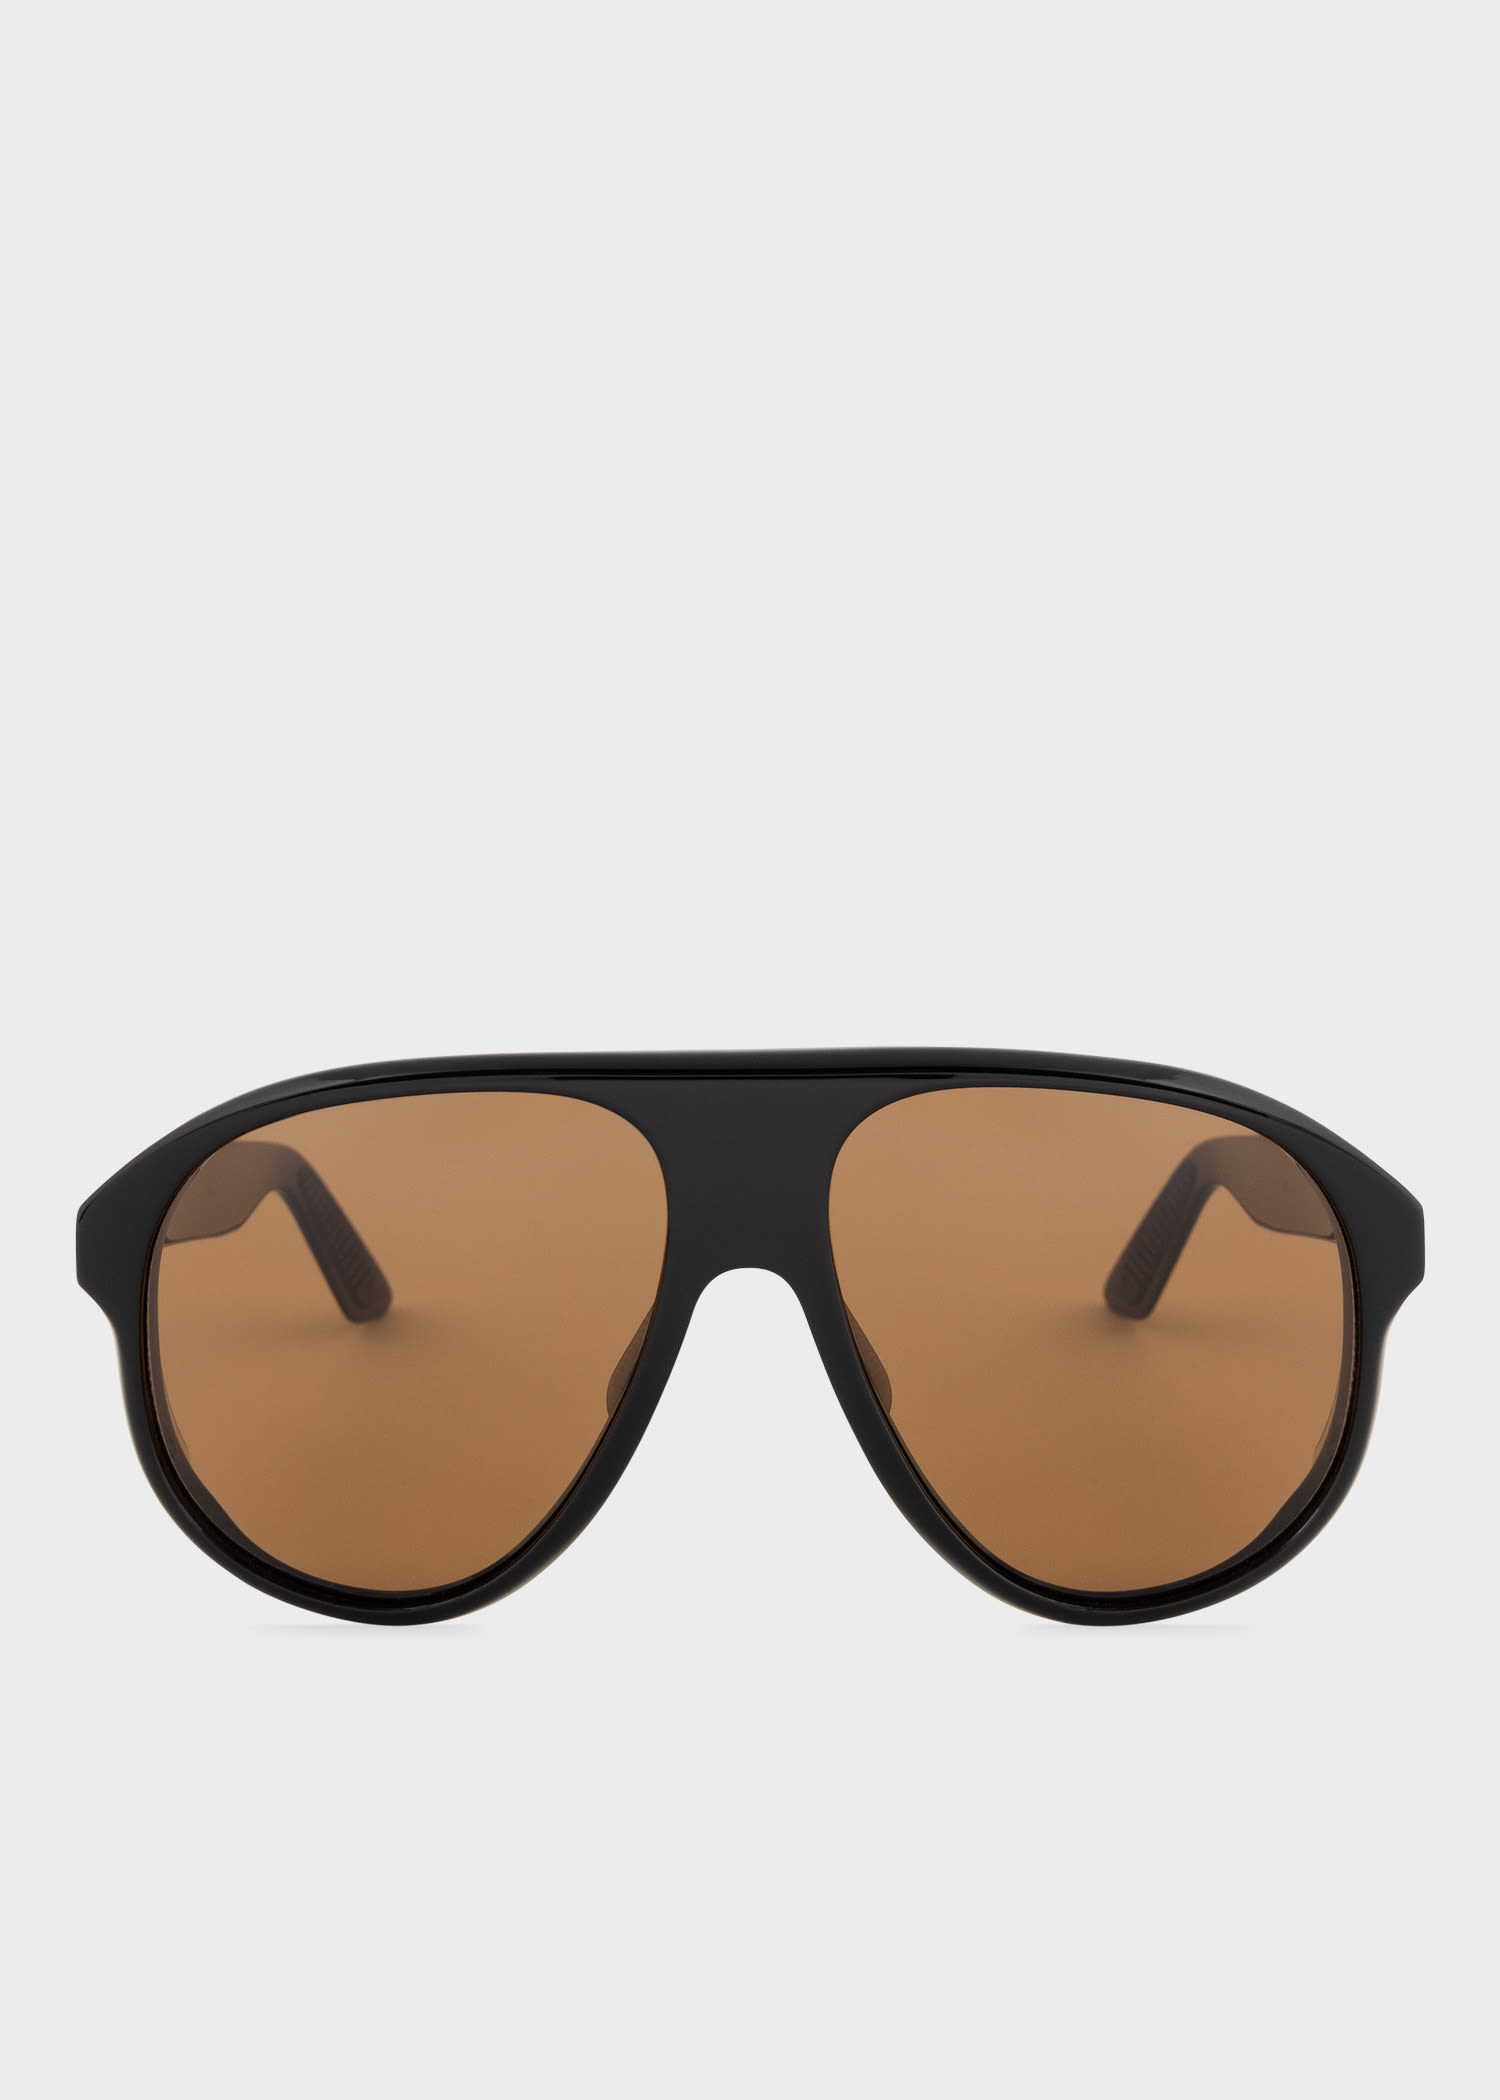 'Stelvio Noir' Sunglasses by Avventura - 1